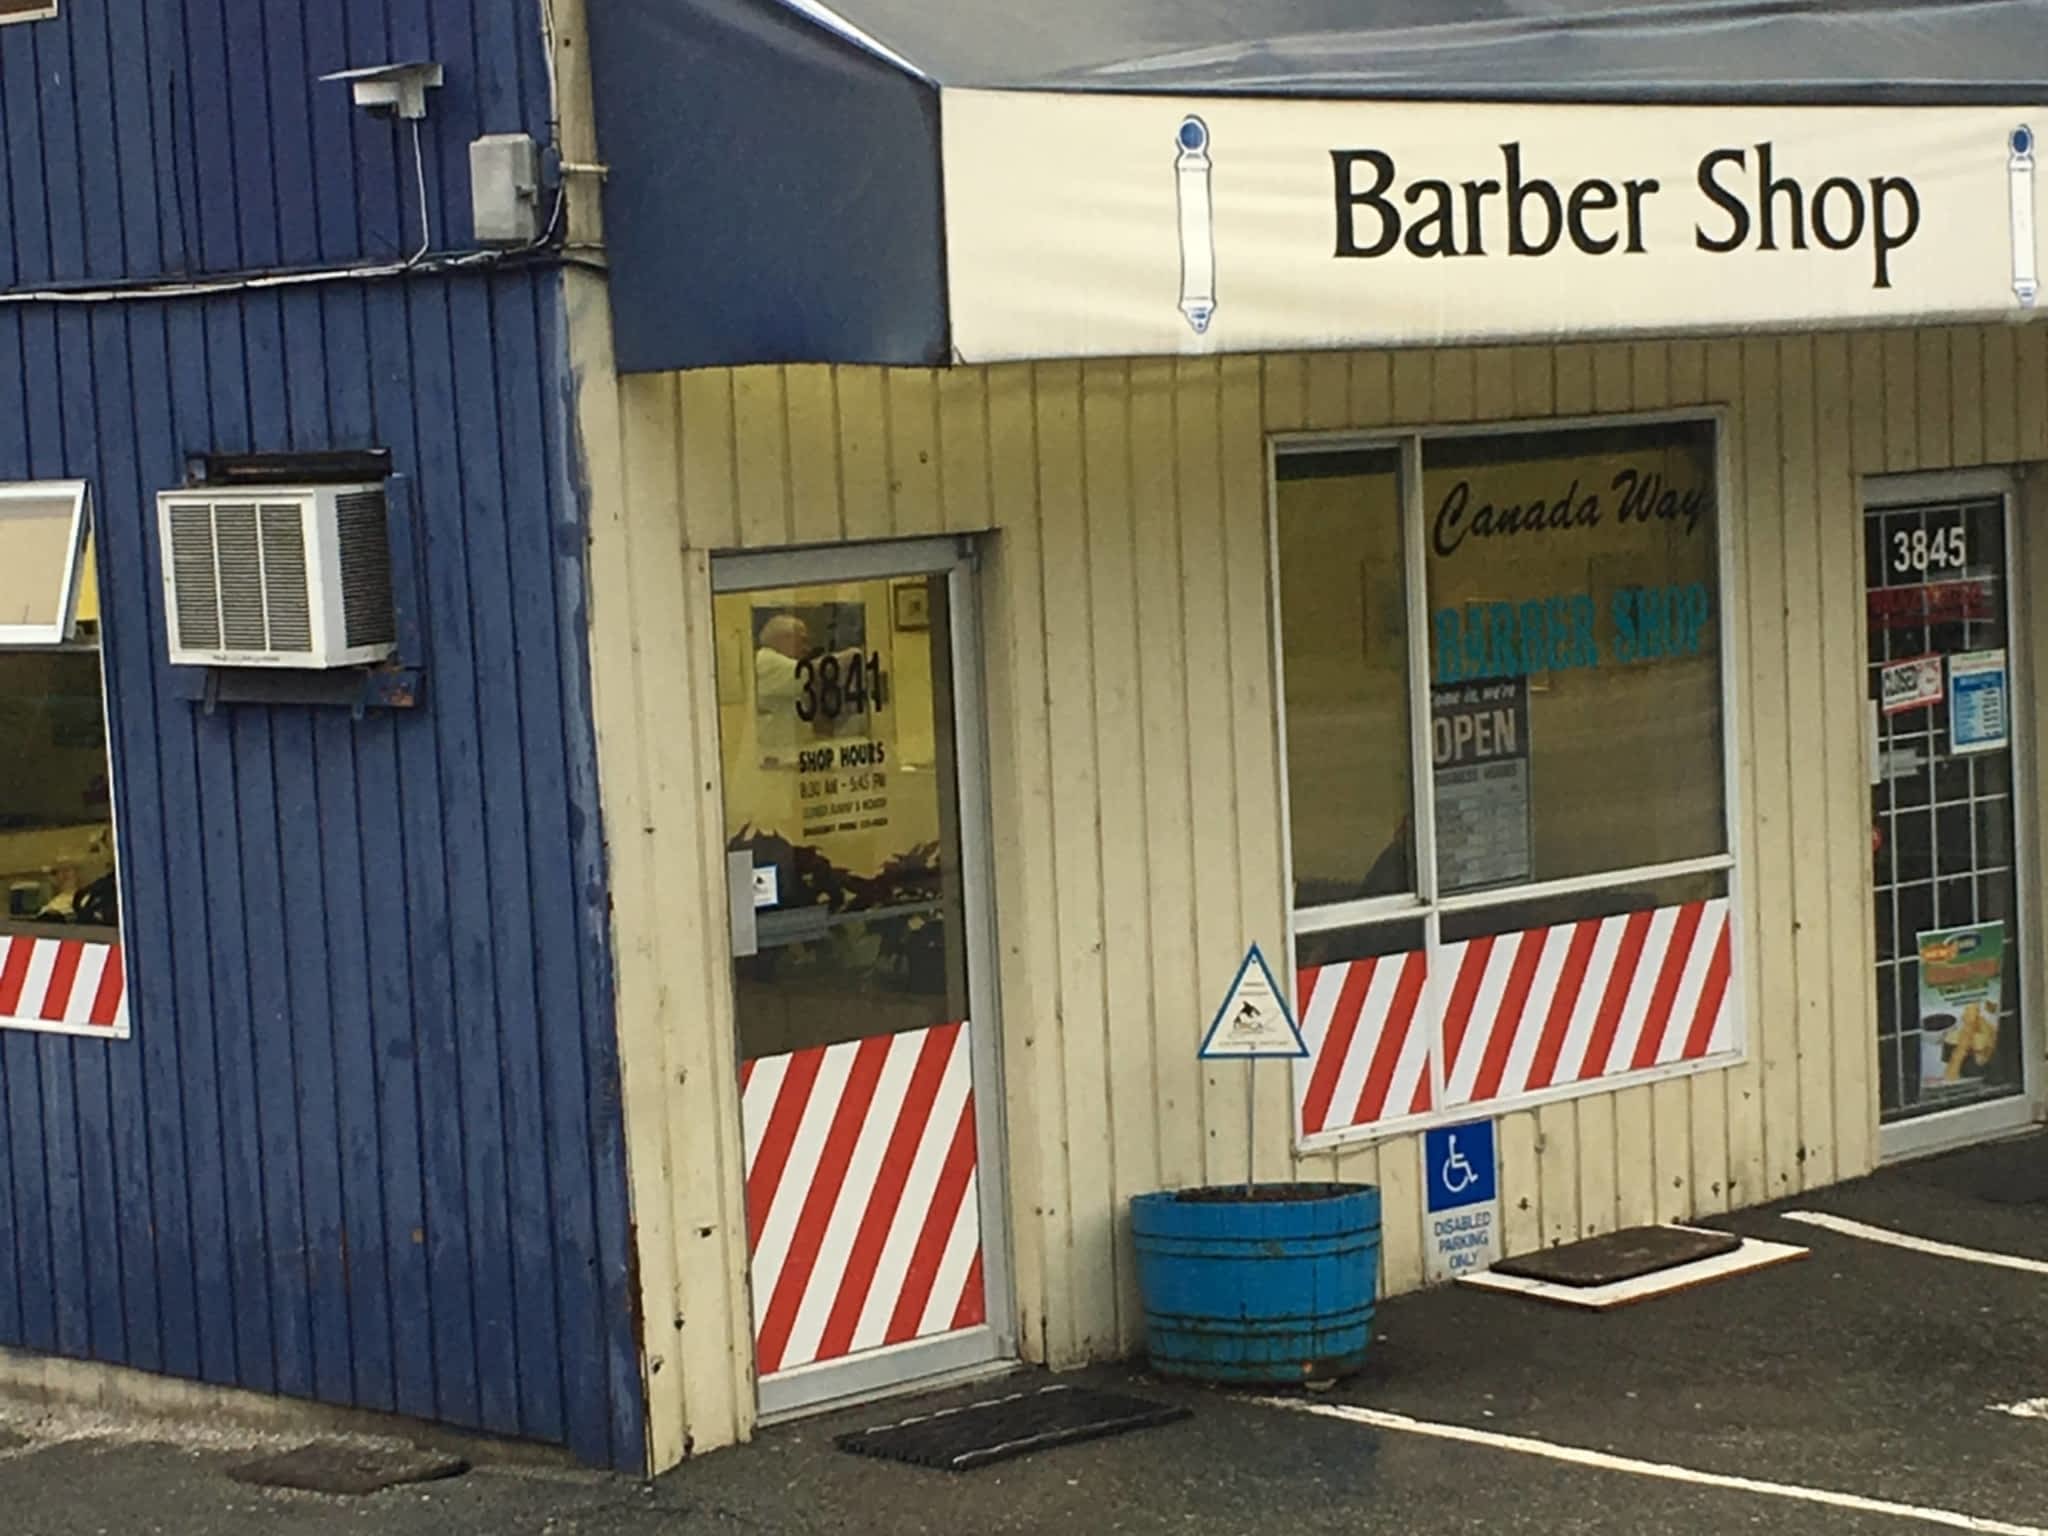 photo Canada Way Barber Shop